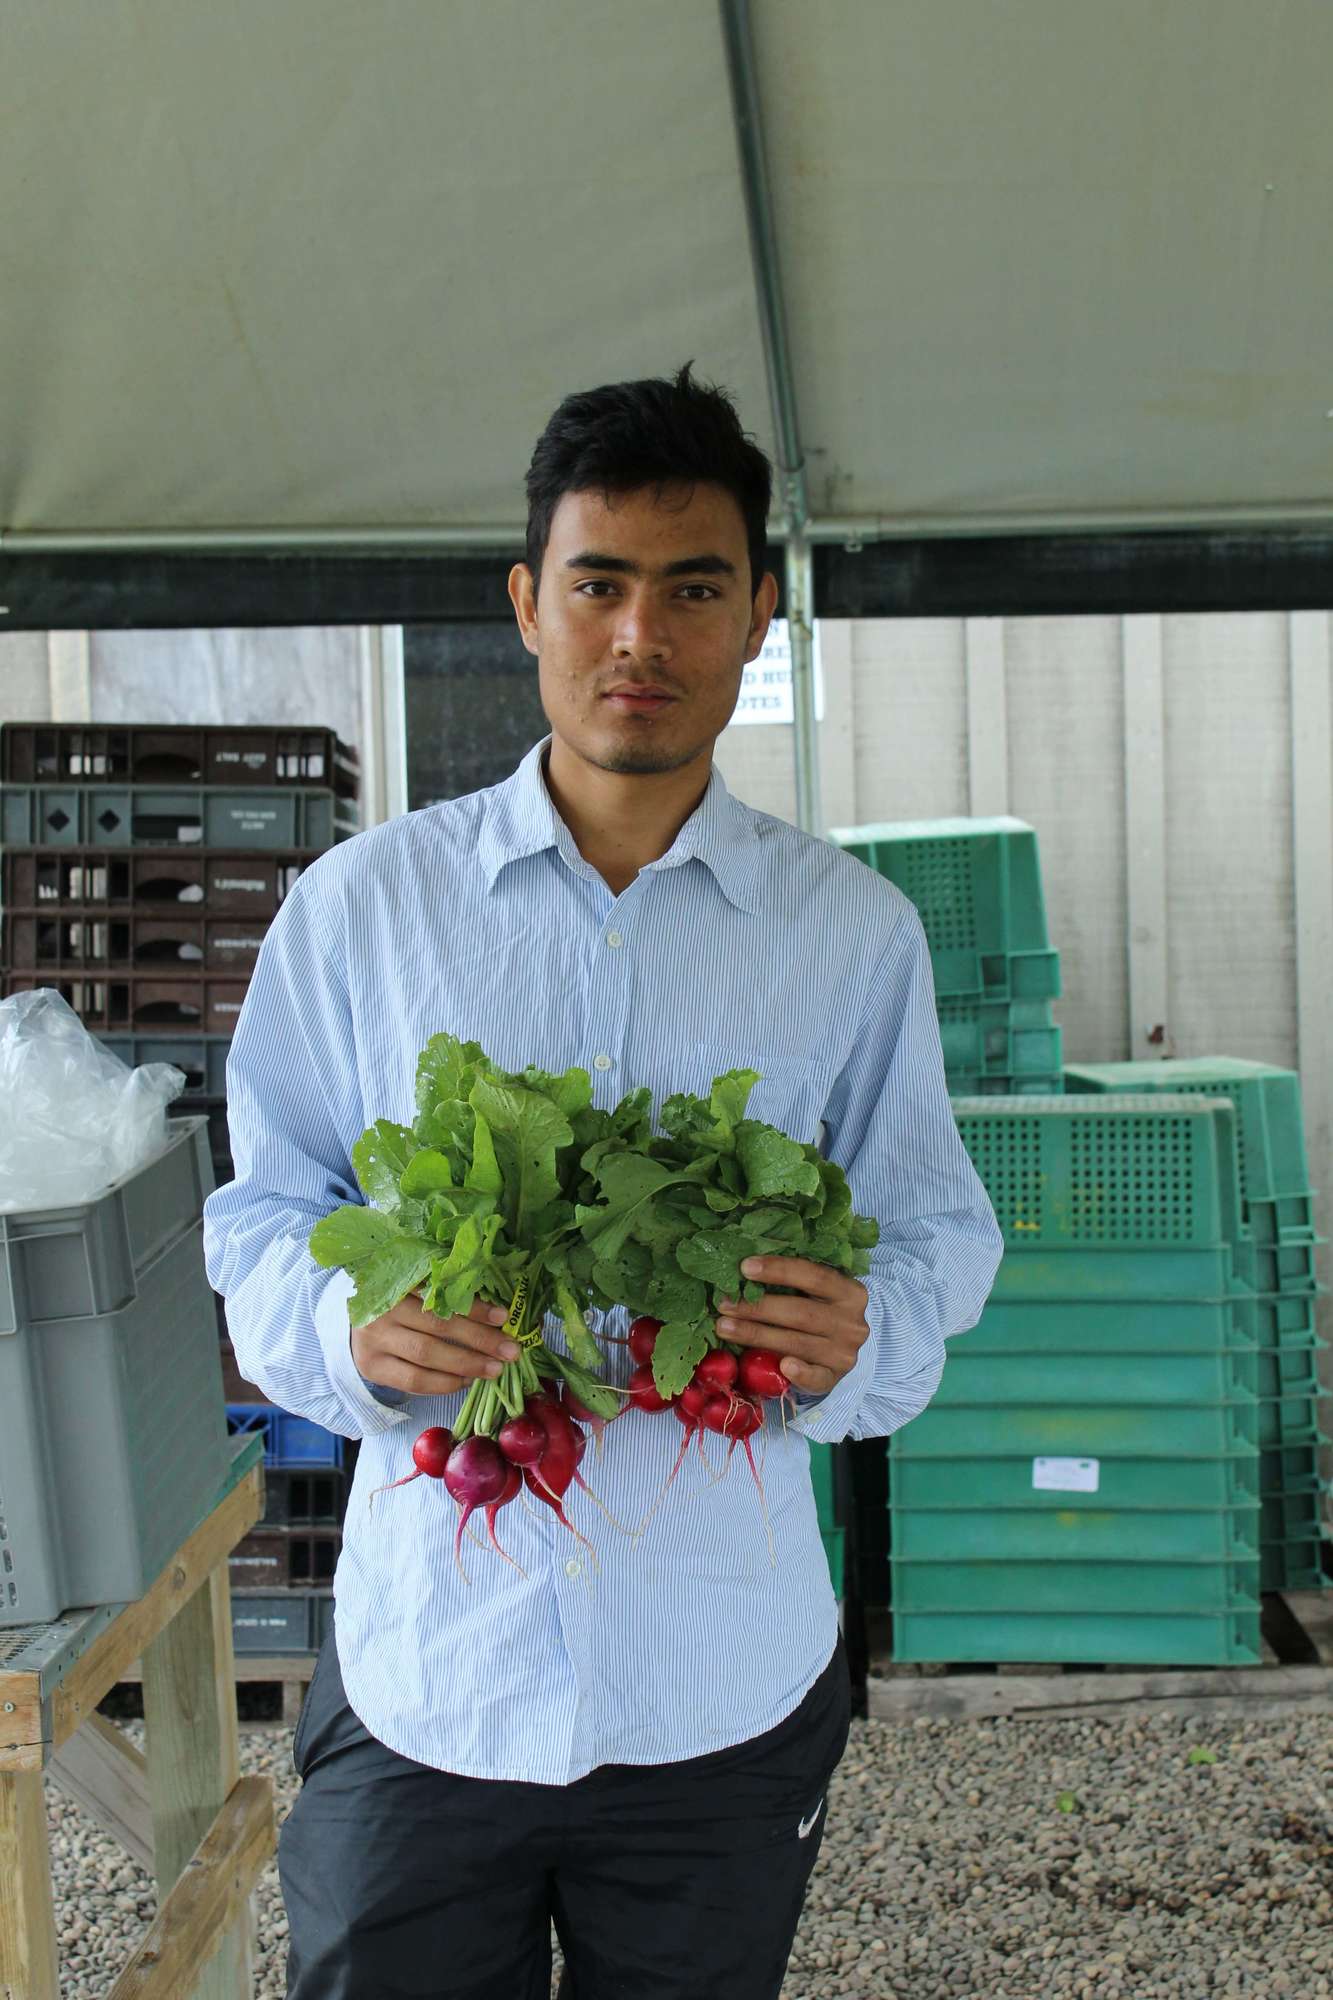 Suraj Budathoki grew up farming next to a Bhutanese refugee camp. MFA’s Farmer Training Program helped him to pursue his passion for sustainable farmi